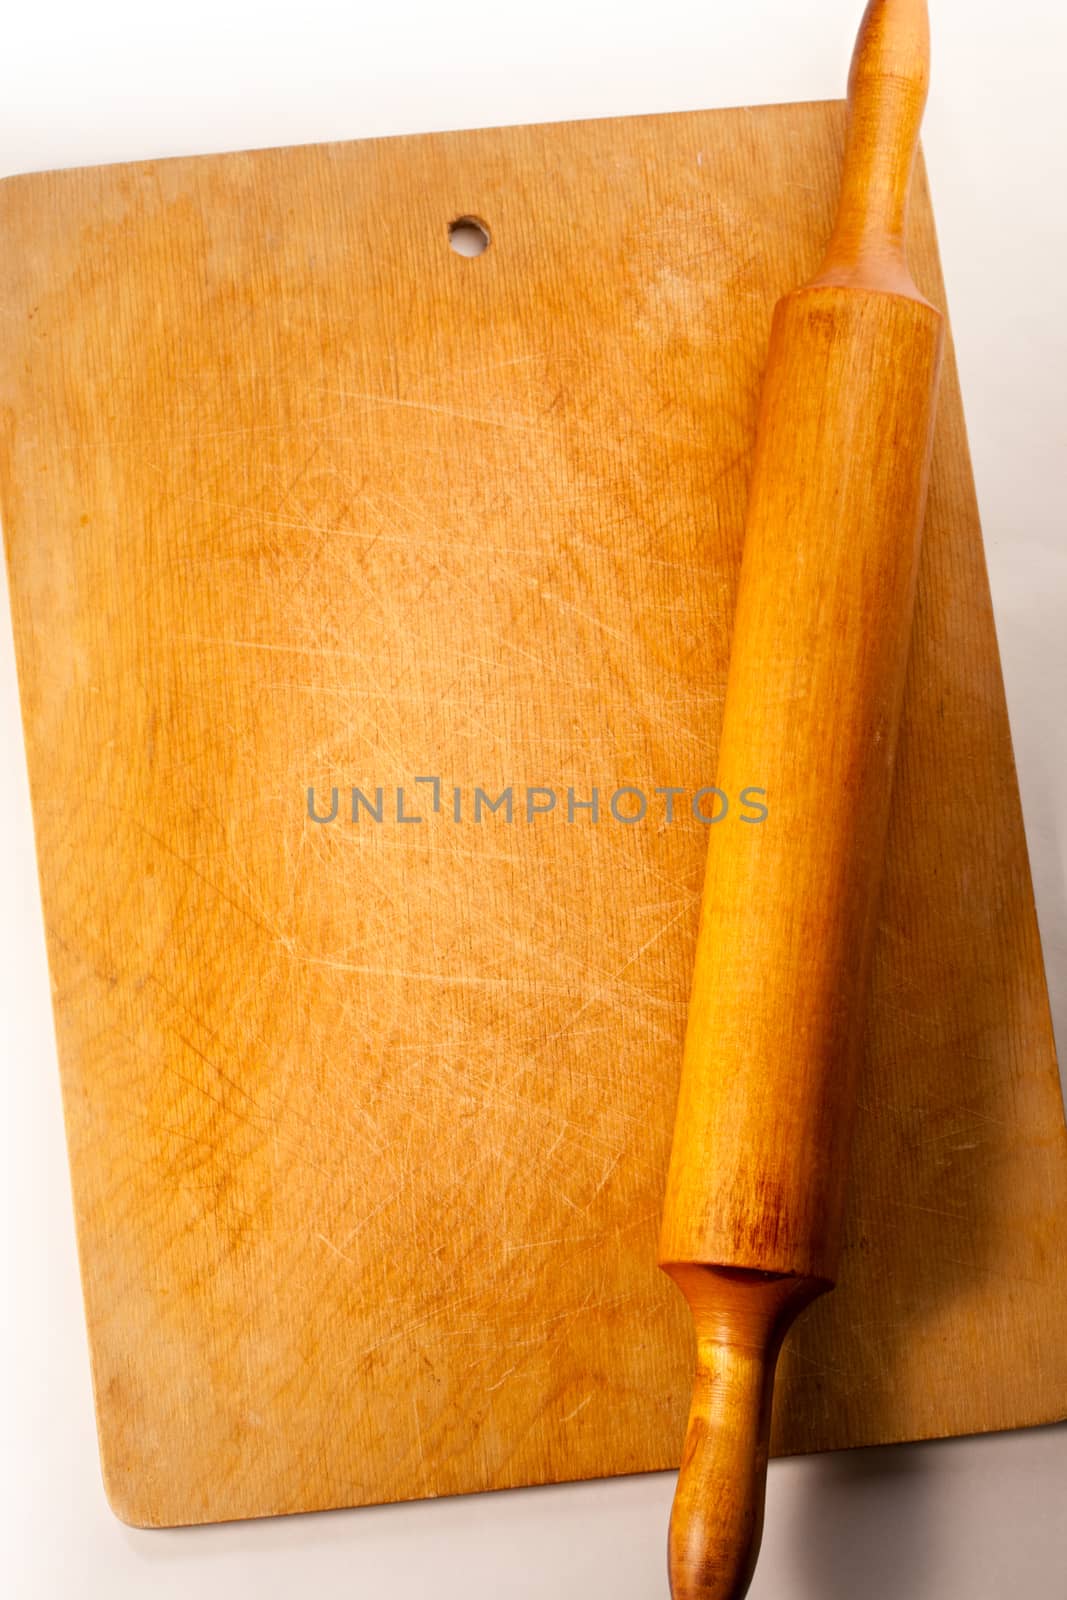 Rolling pin and wooden breadboard by Garsya